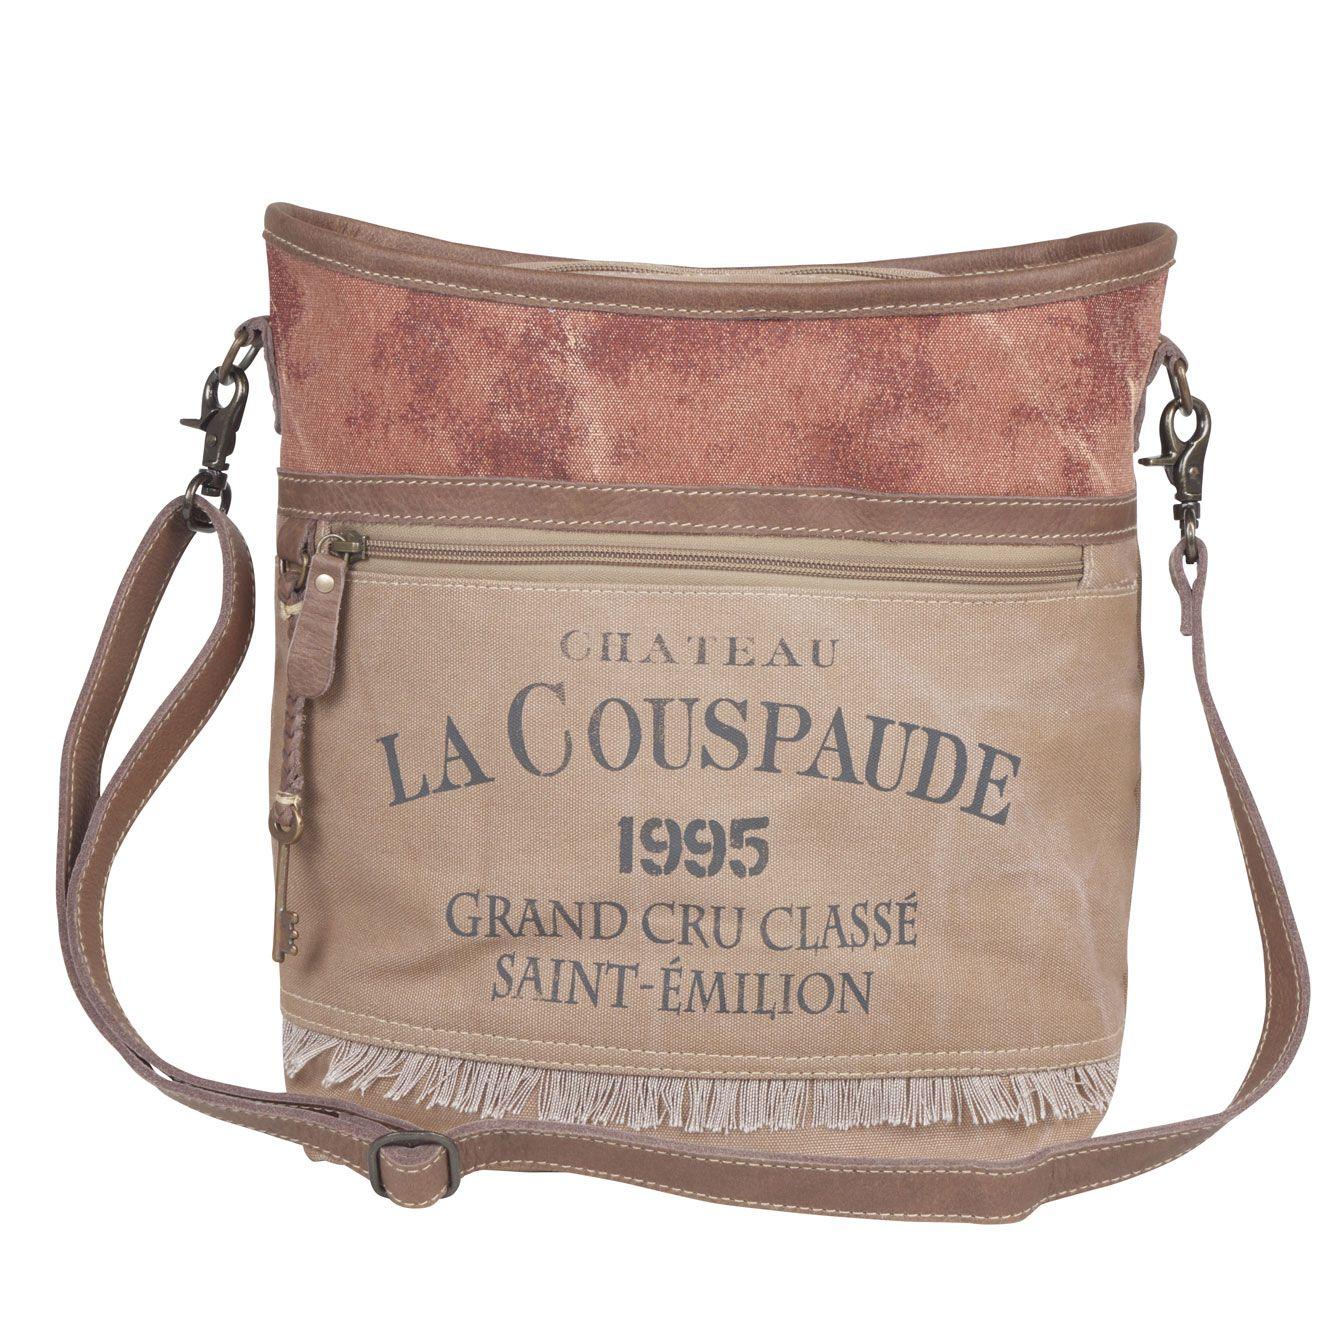 La Couspaude Fringe Shoulder Bag from Brooklyn Bag at Moosestrum.com